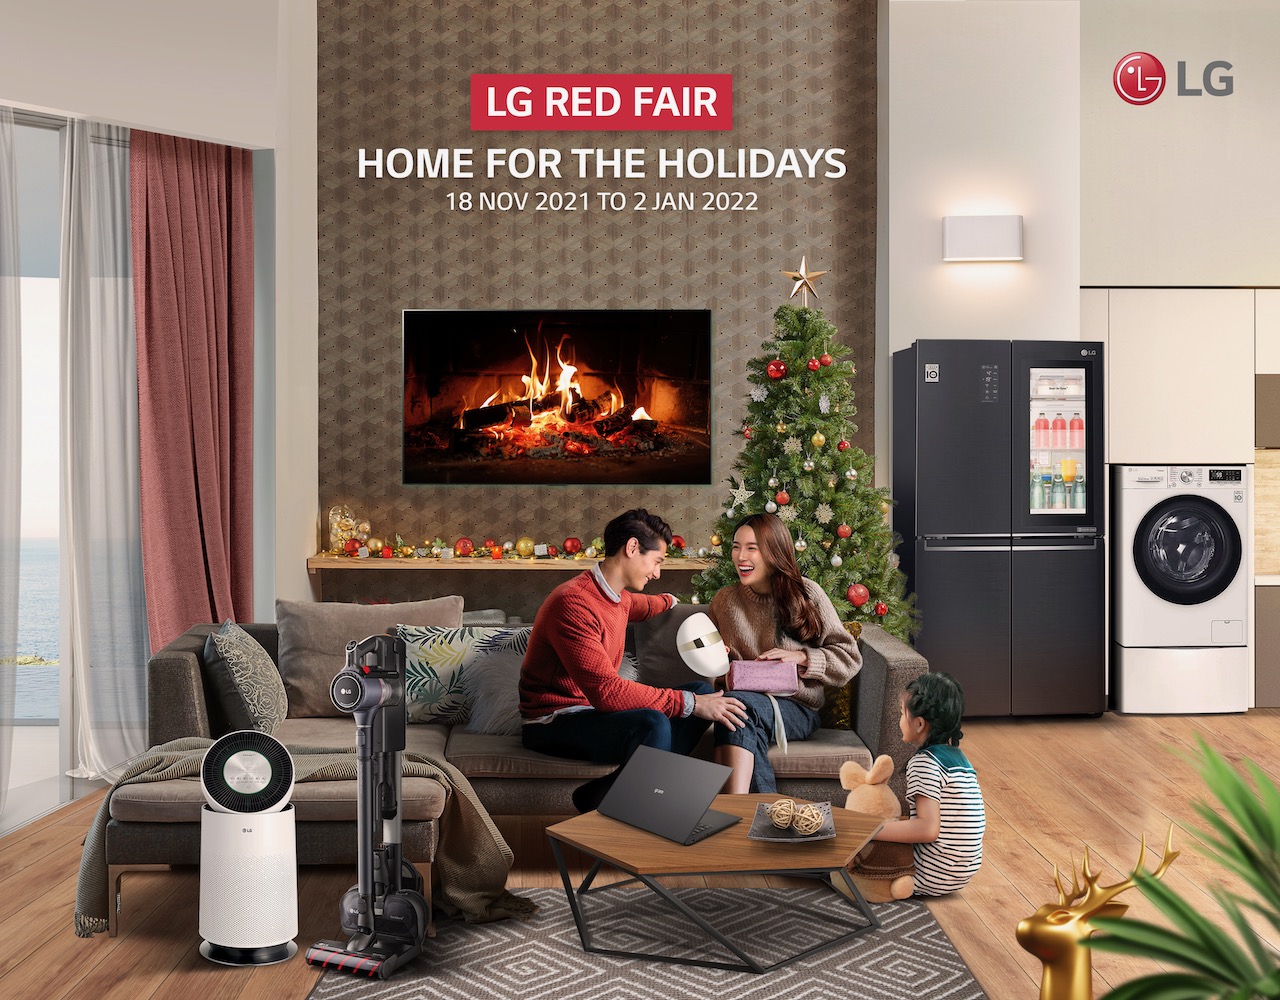 LG Red Fair Deals for Christmas Holidays